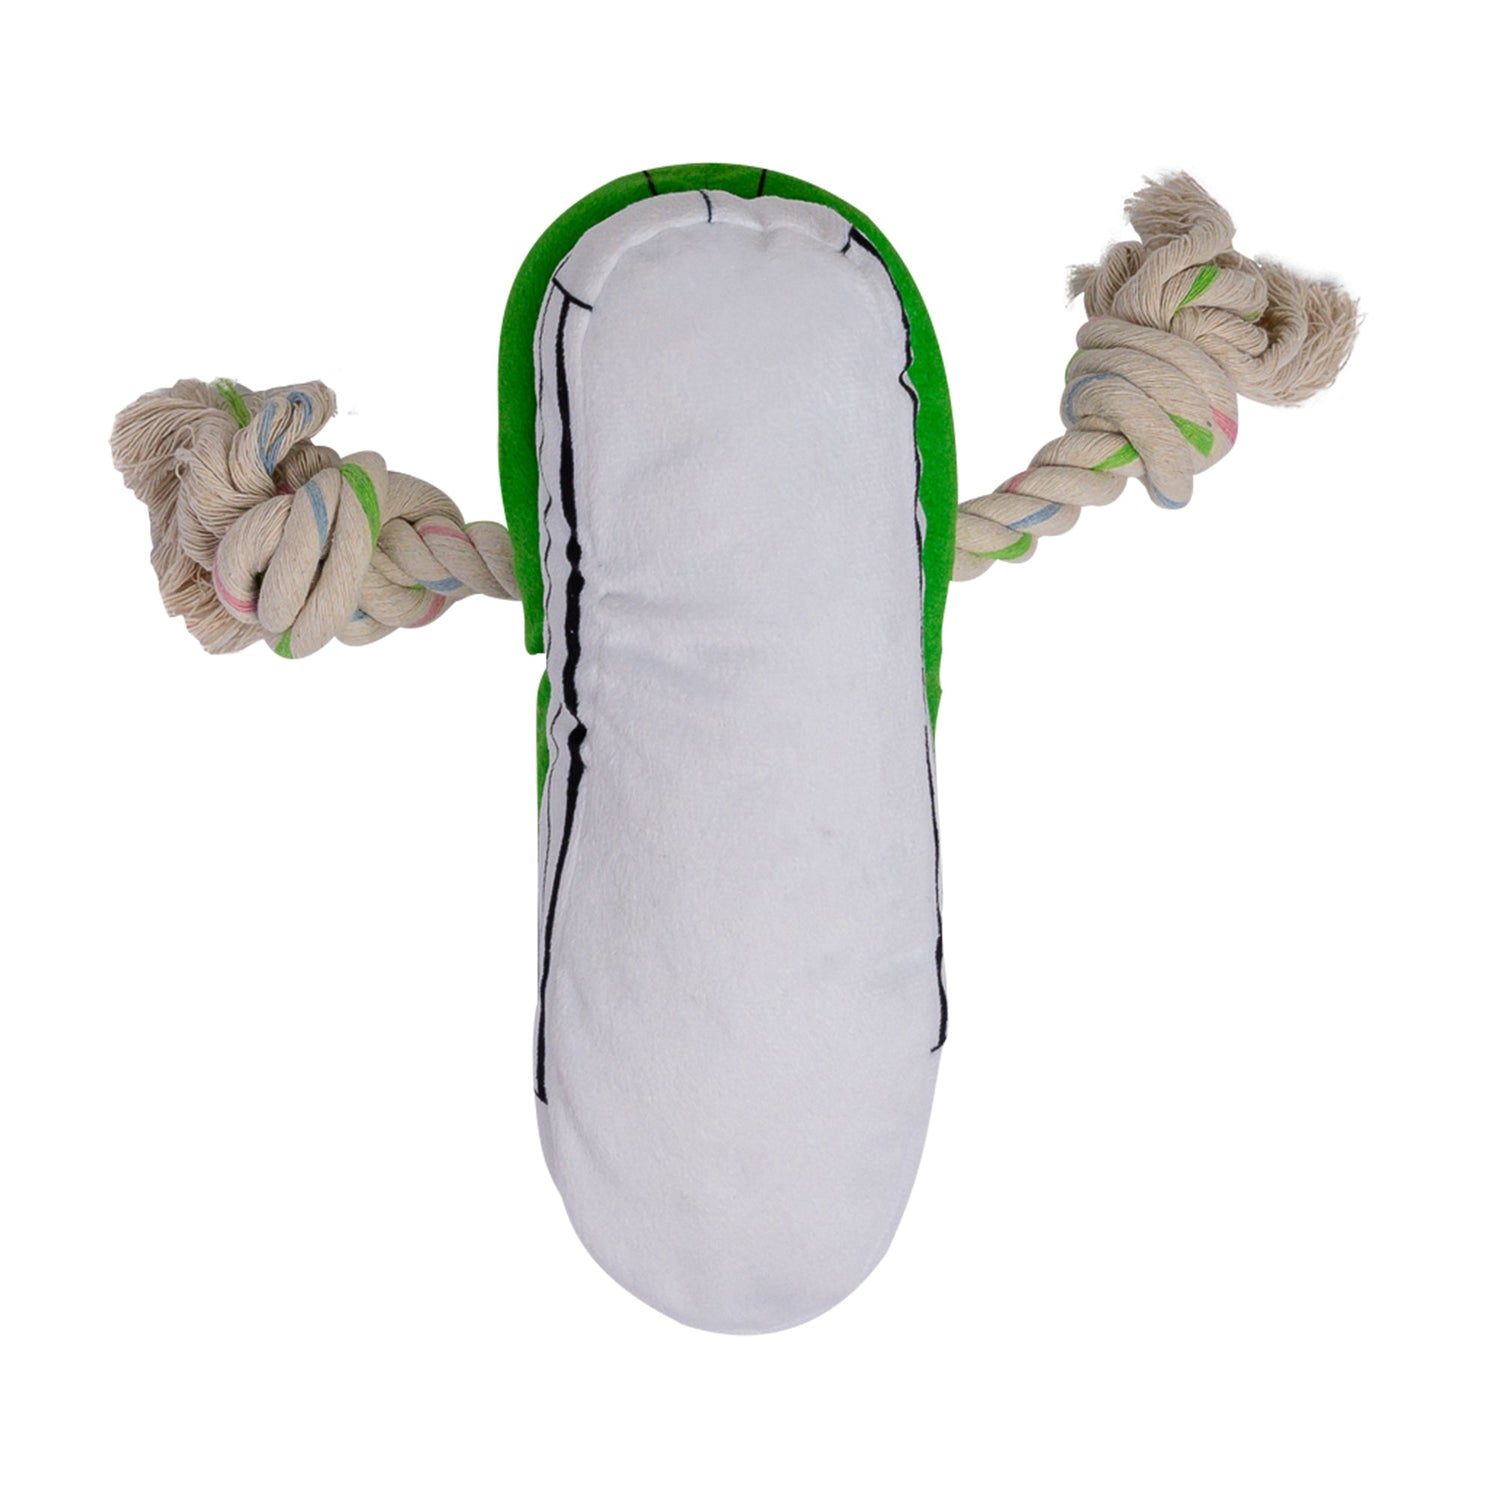 Squeaking Comfort Plush Sneaker Dog Toy - Green-2